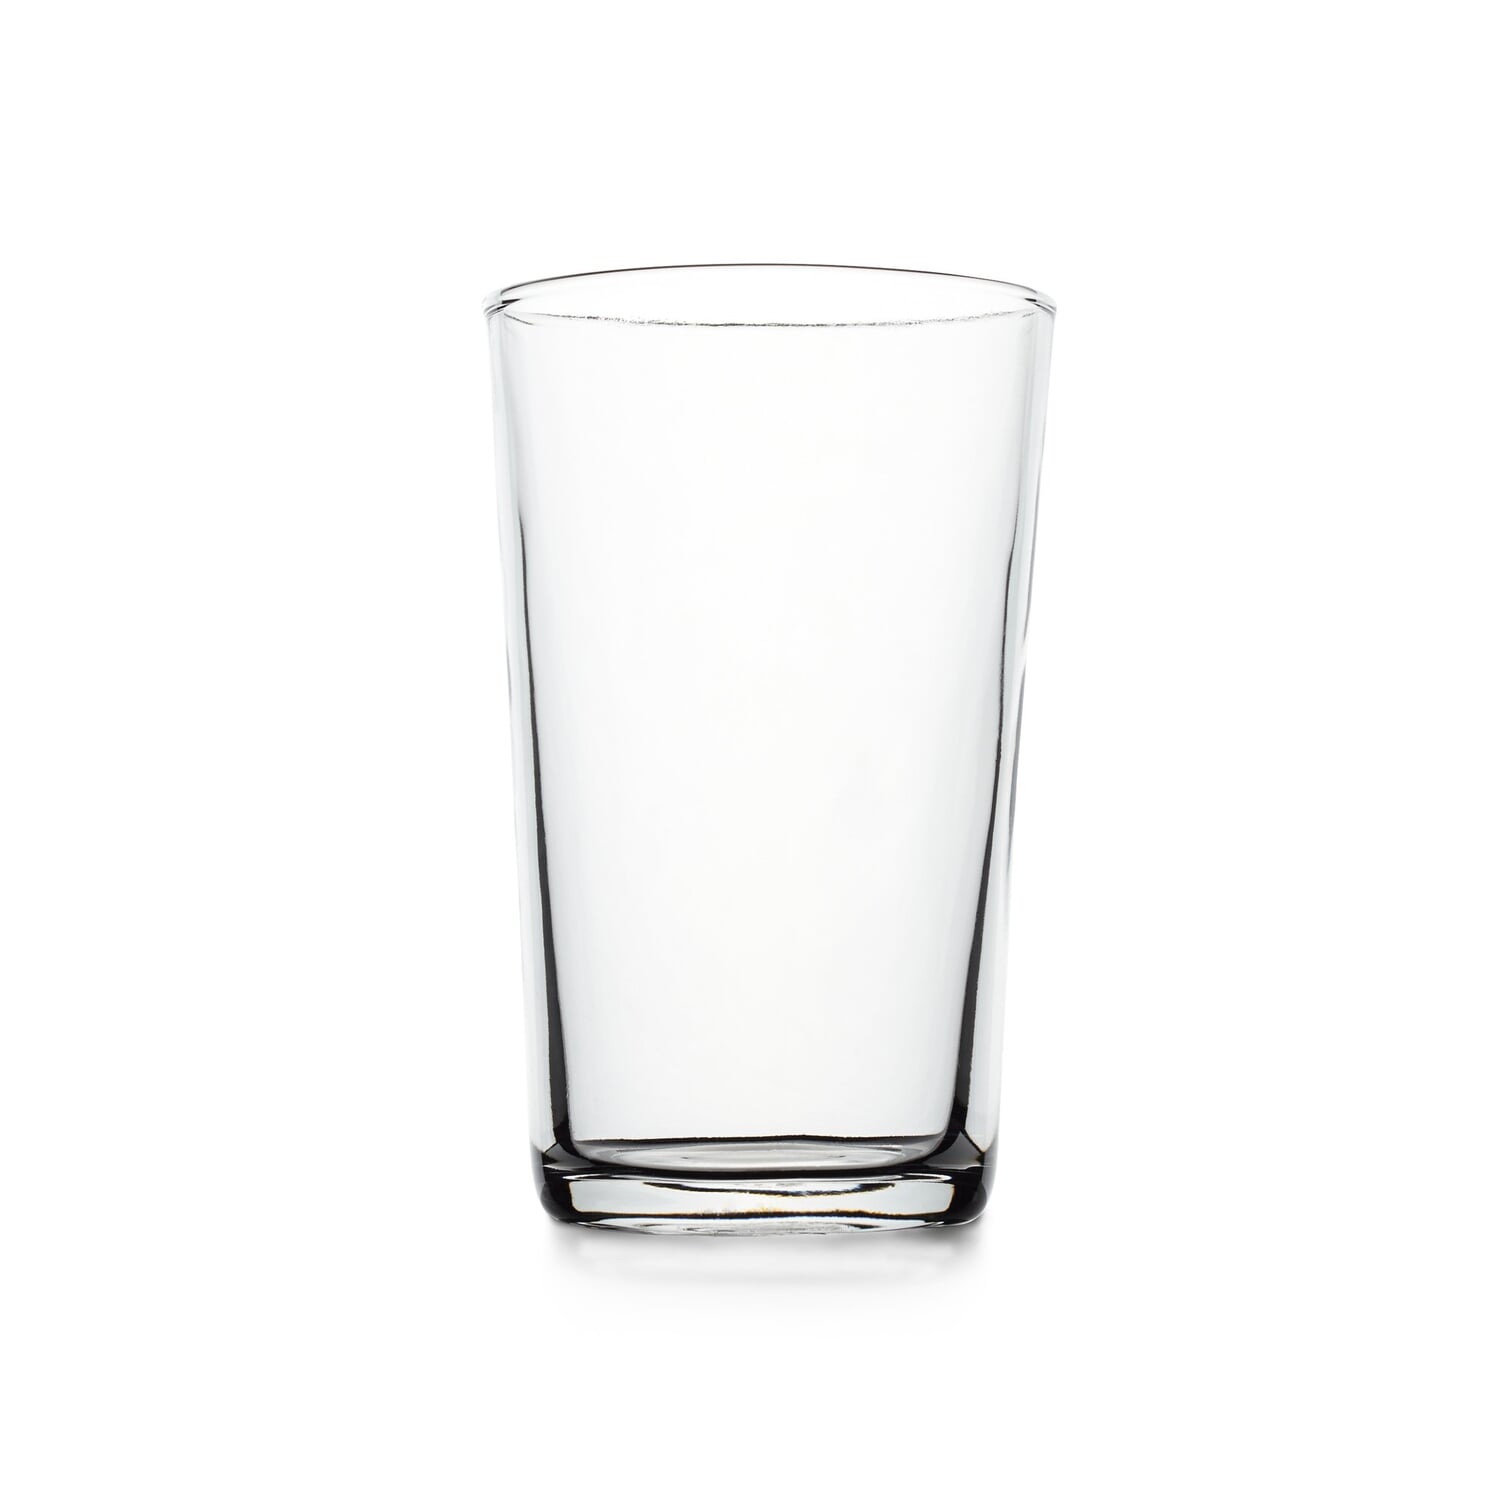 Drinking glass jus, Medium